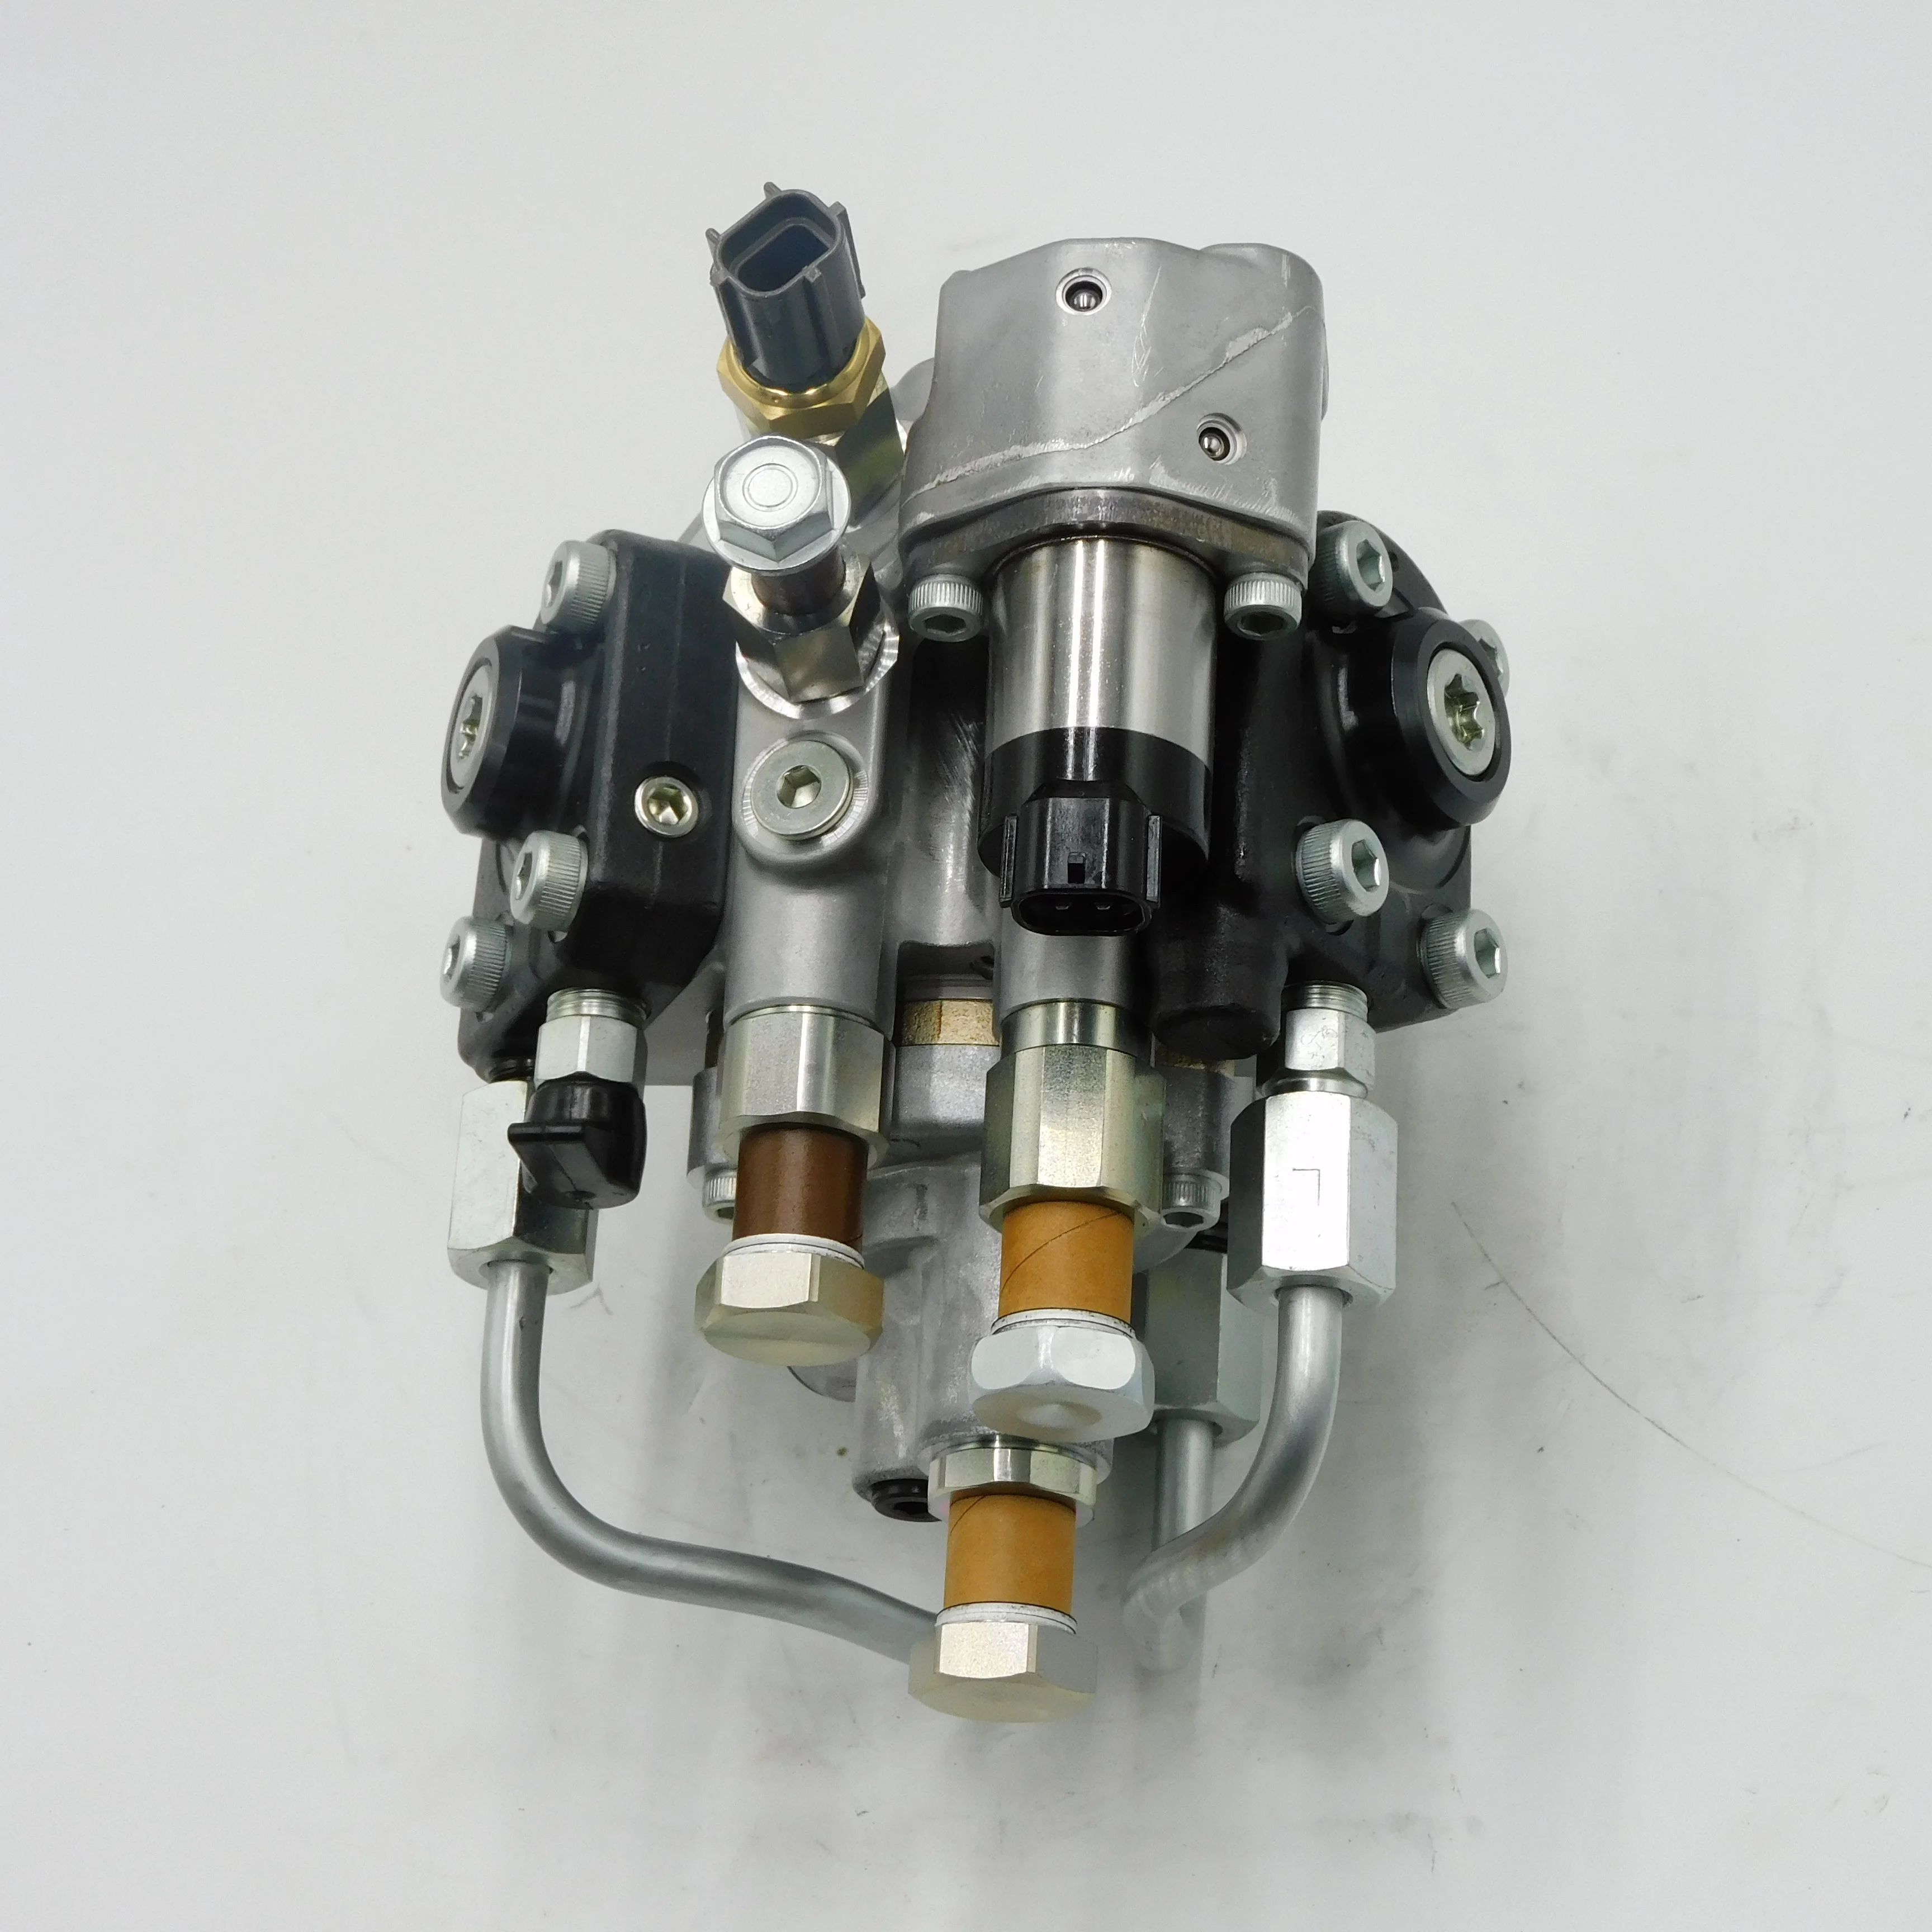 Original 6HK1SKSA01/02 Fuel Injection Pump 294050-0650 8-98238464 